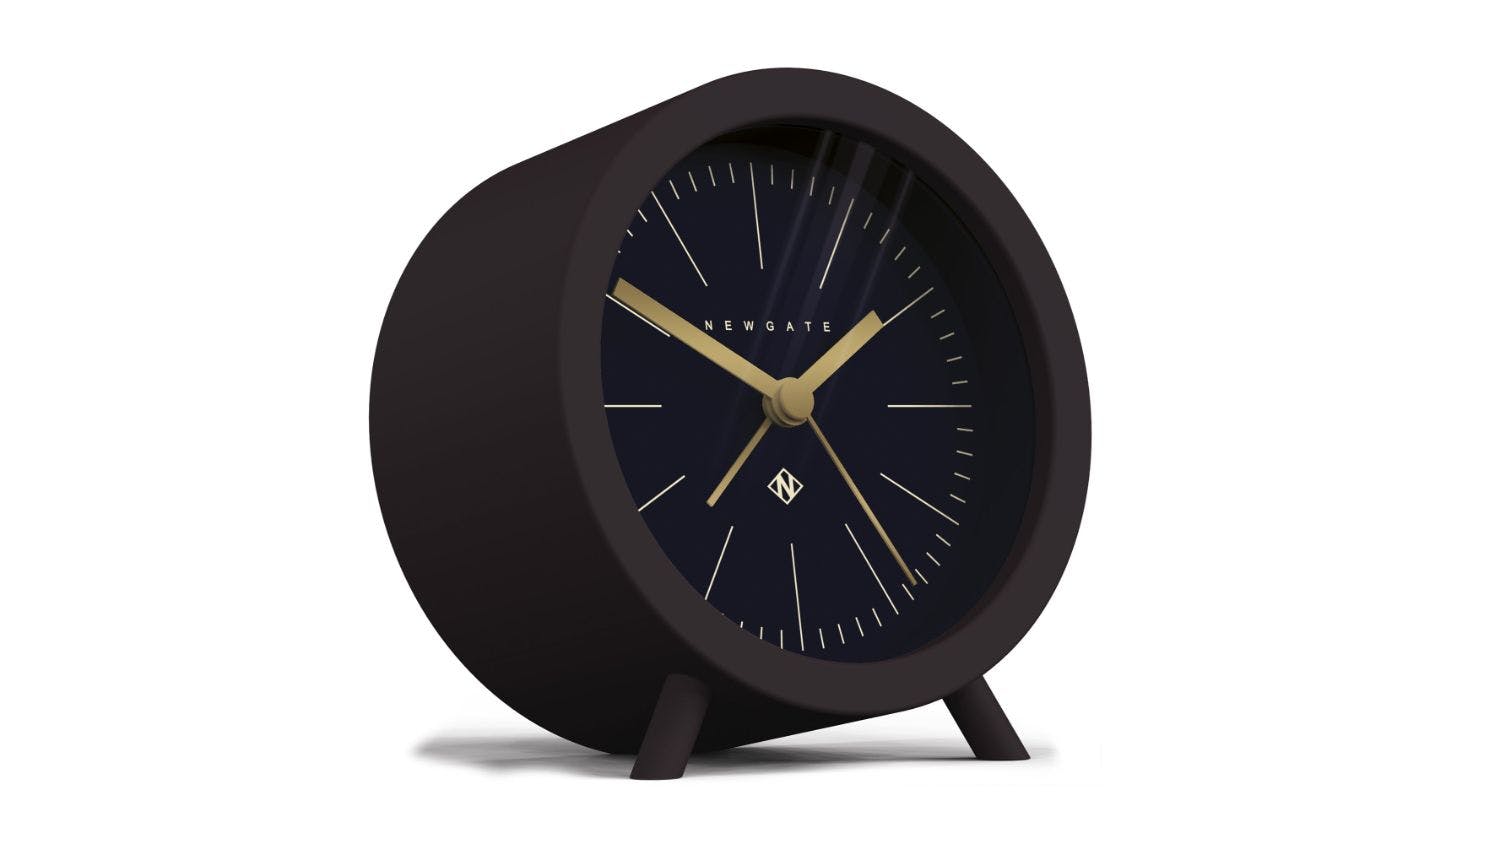 Newgate "Fred" Light Dial Alarm Clock - Matte Chocolate Black